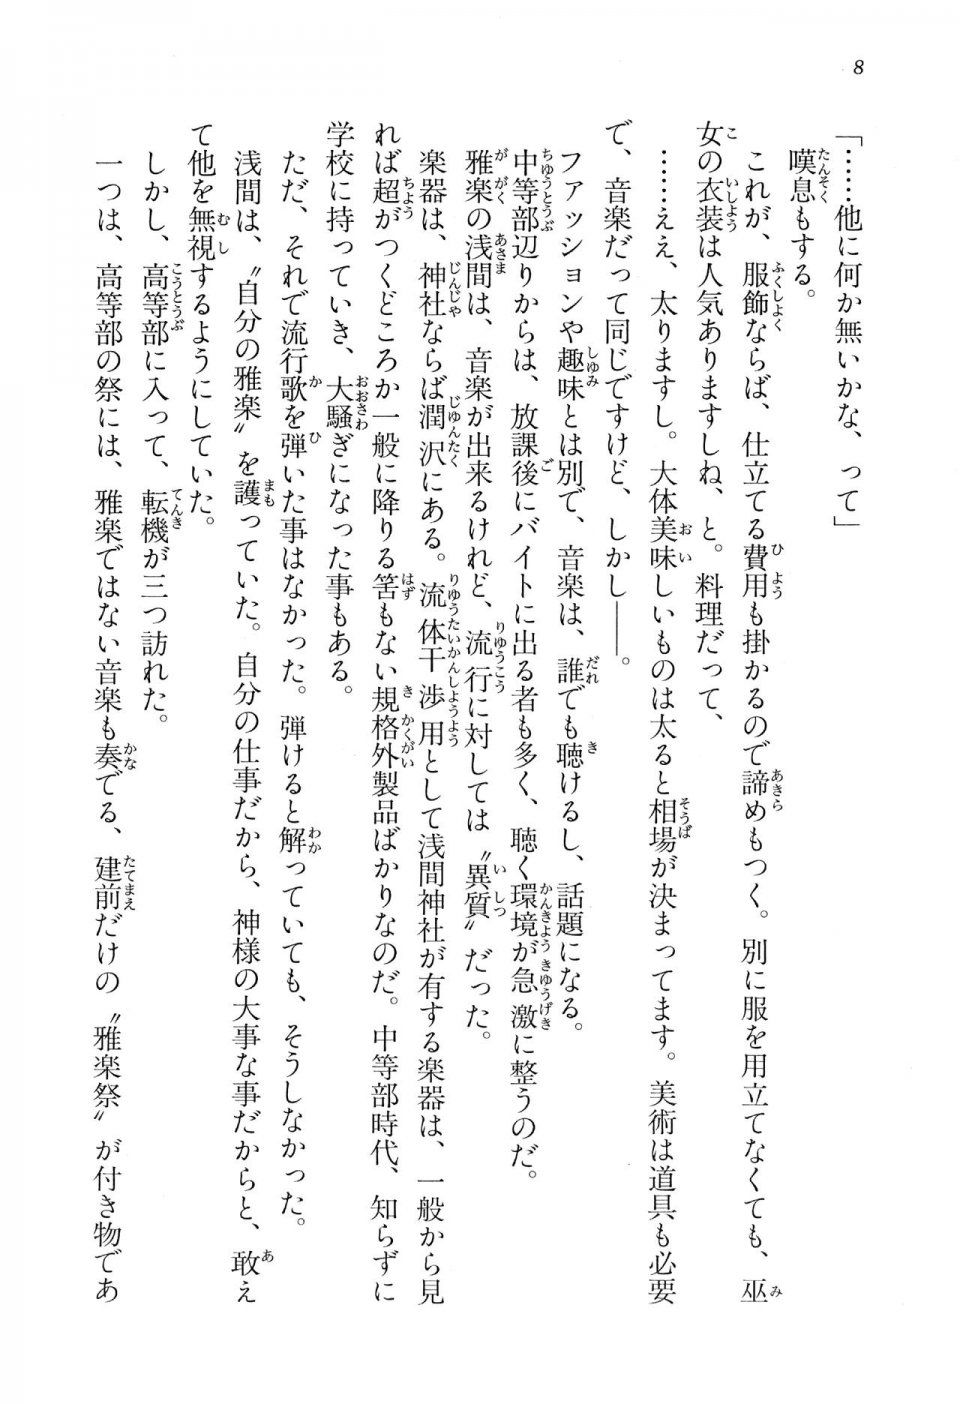 Kyoukai Senjou no Horizon BD Special Mininovel Vol 1(1A) - Photo #12